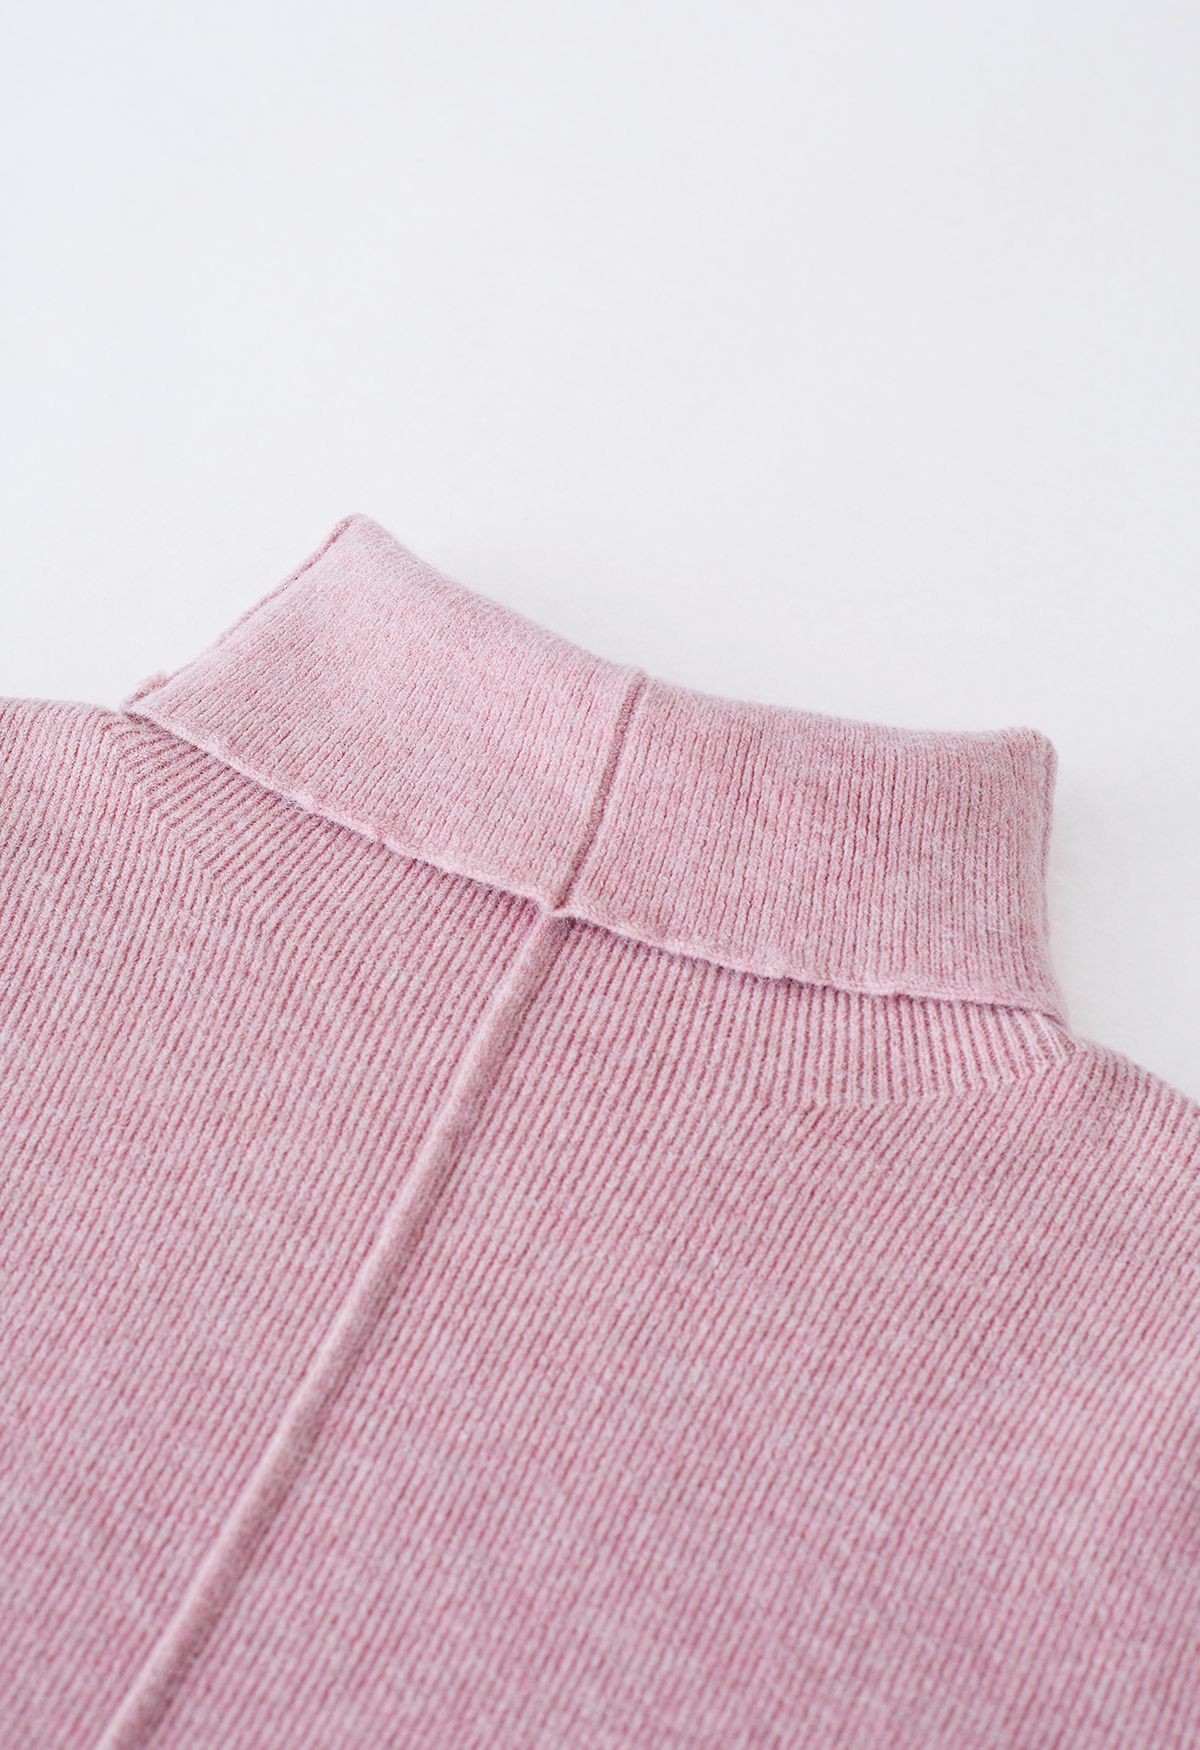 Seam Detail High Neck Slit Knit Top in Pink